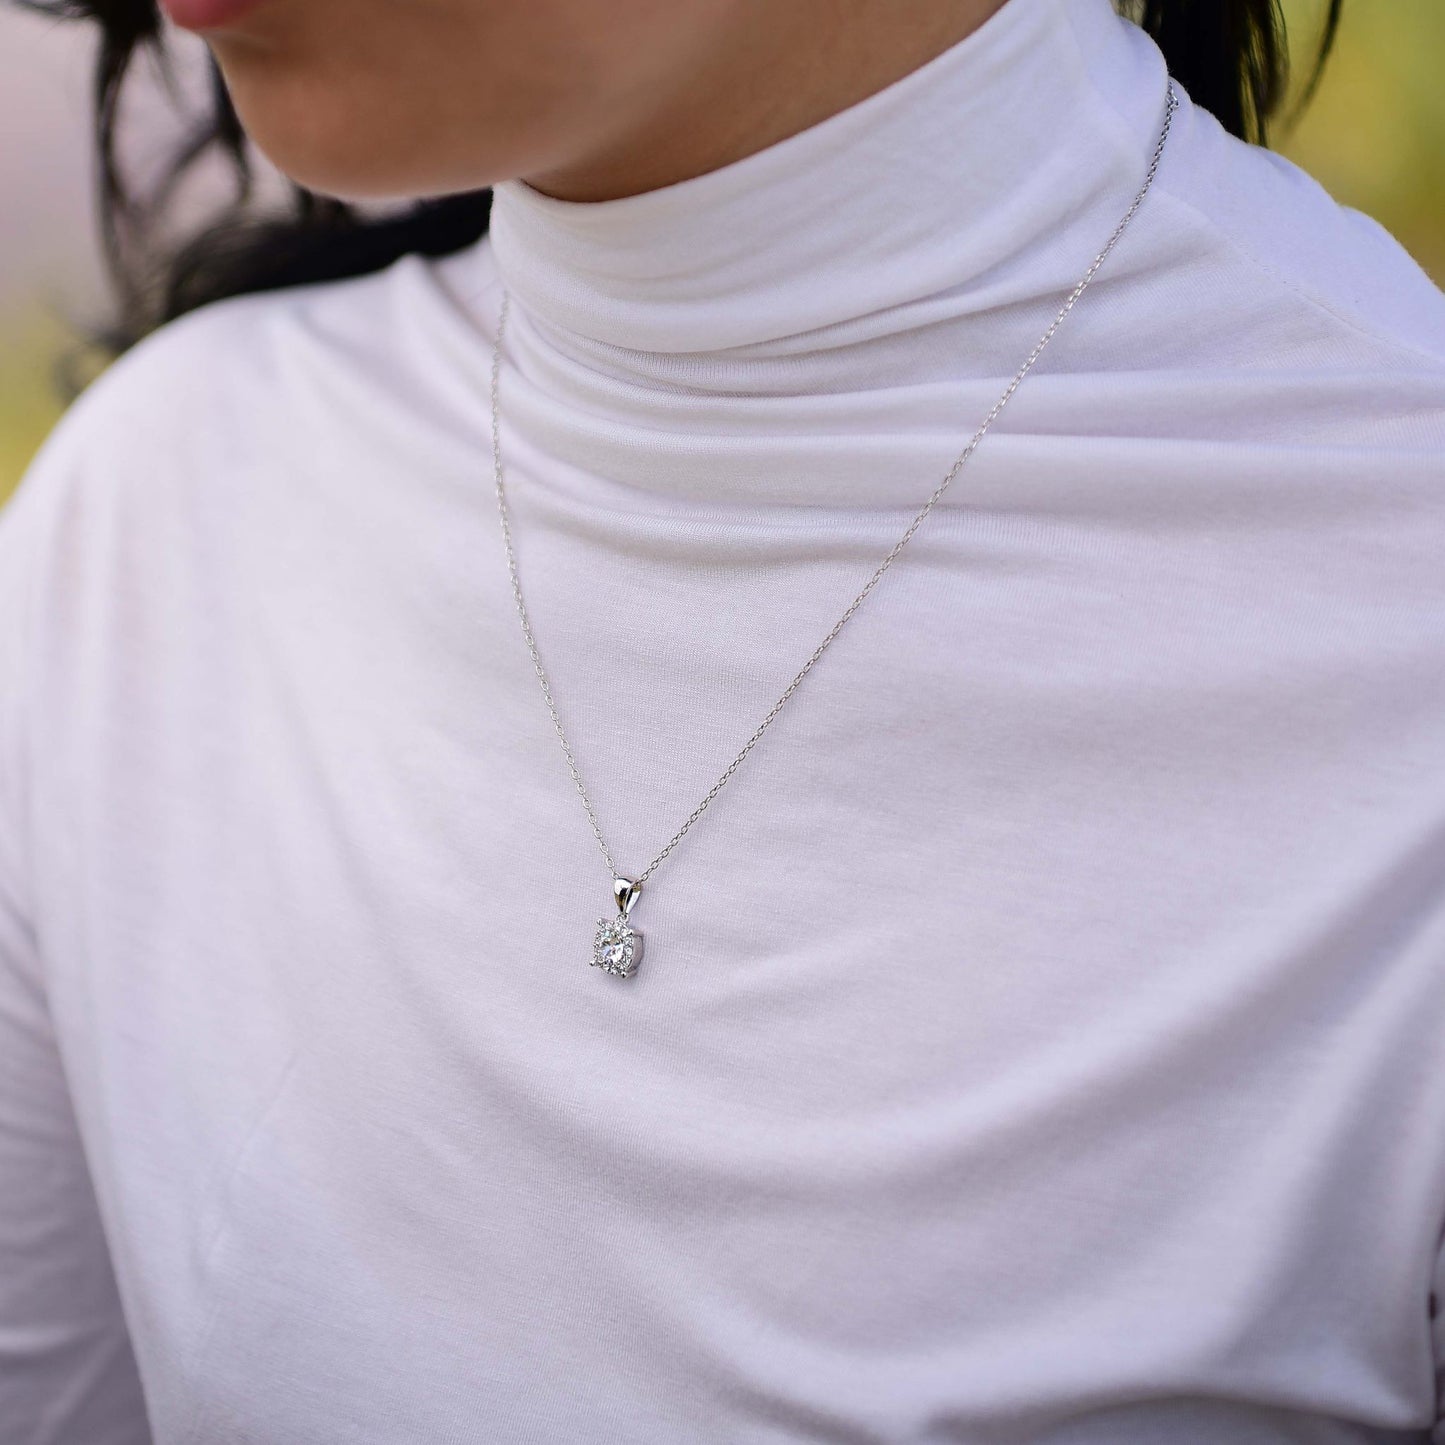 "Present" necklace